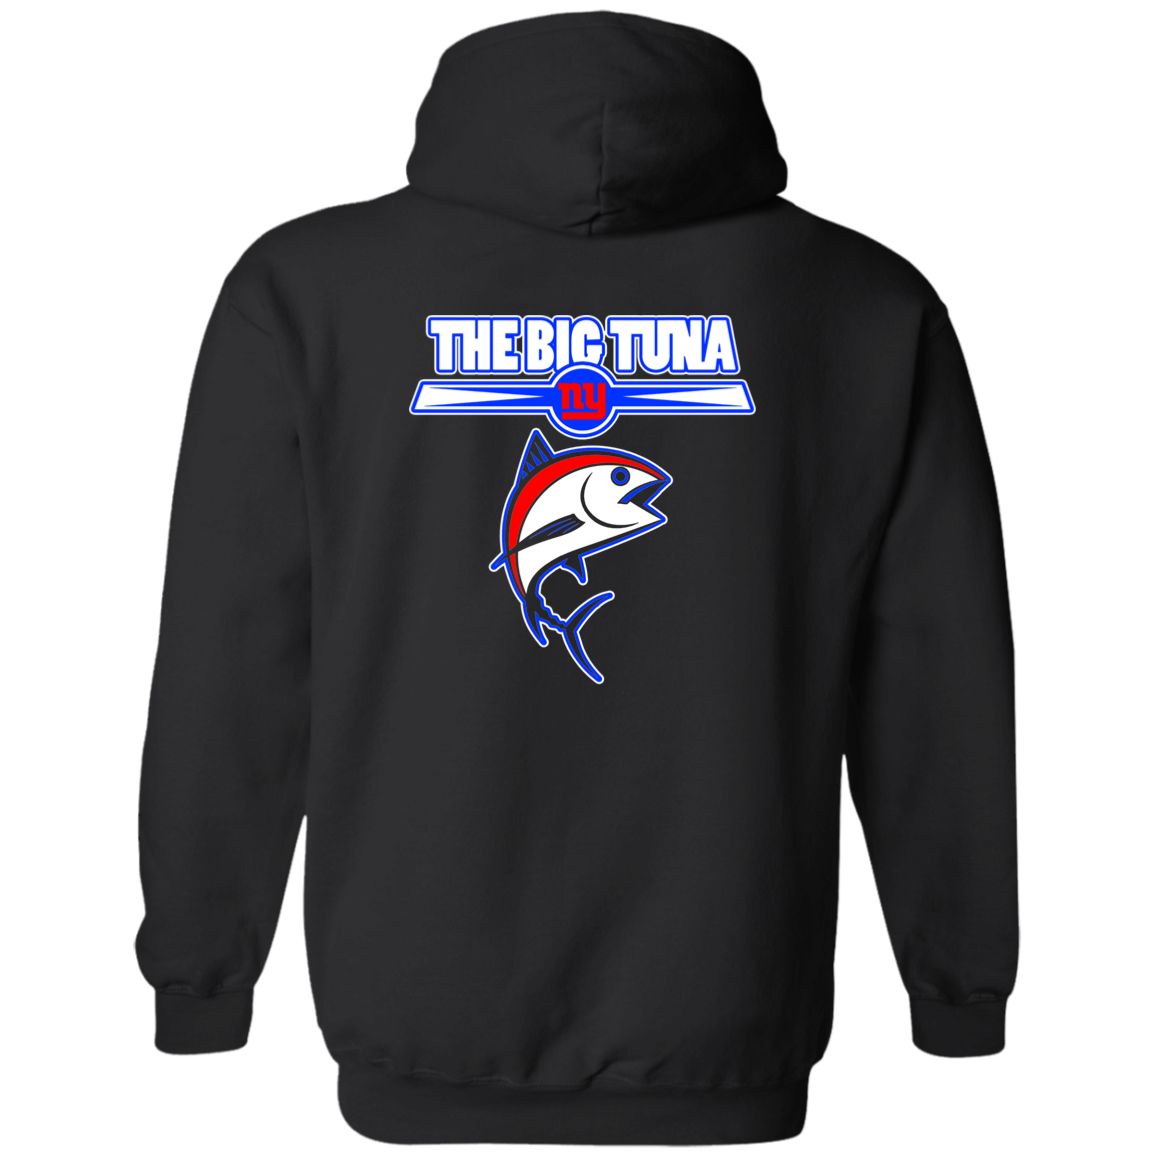 ArtichokeUSA Custom Design. The Big Tuna. Bill Parcell Tribute. NY Giants Fan Art. Zip Up Hooded Sweatshirt